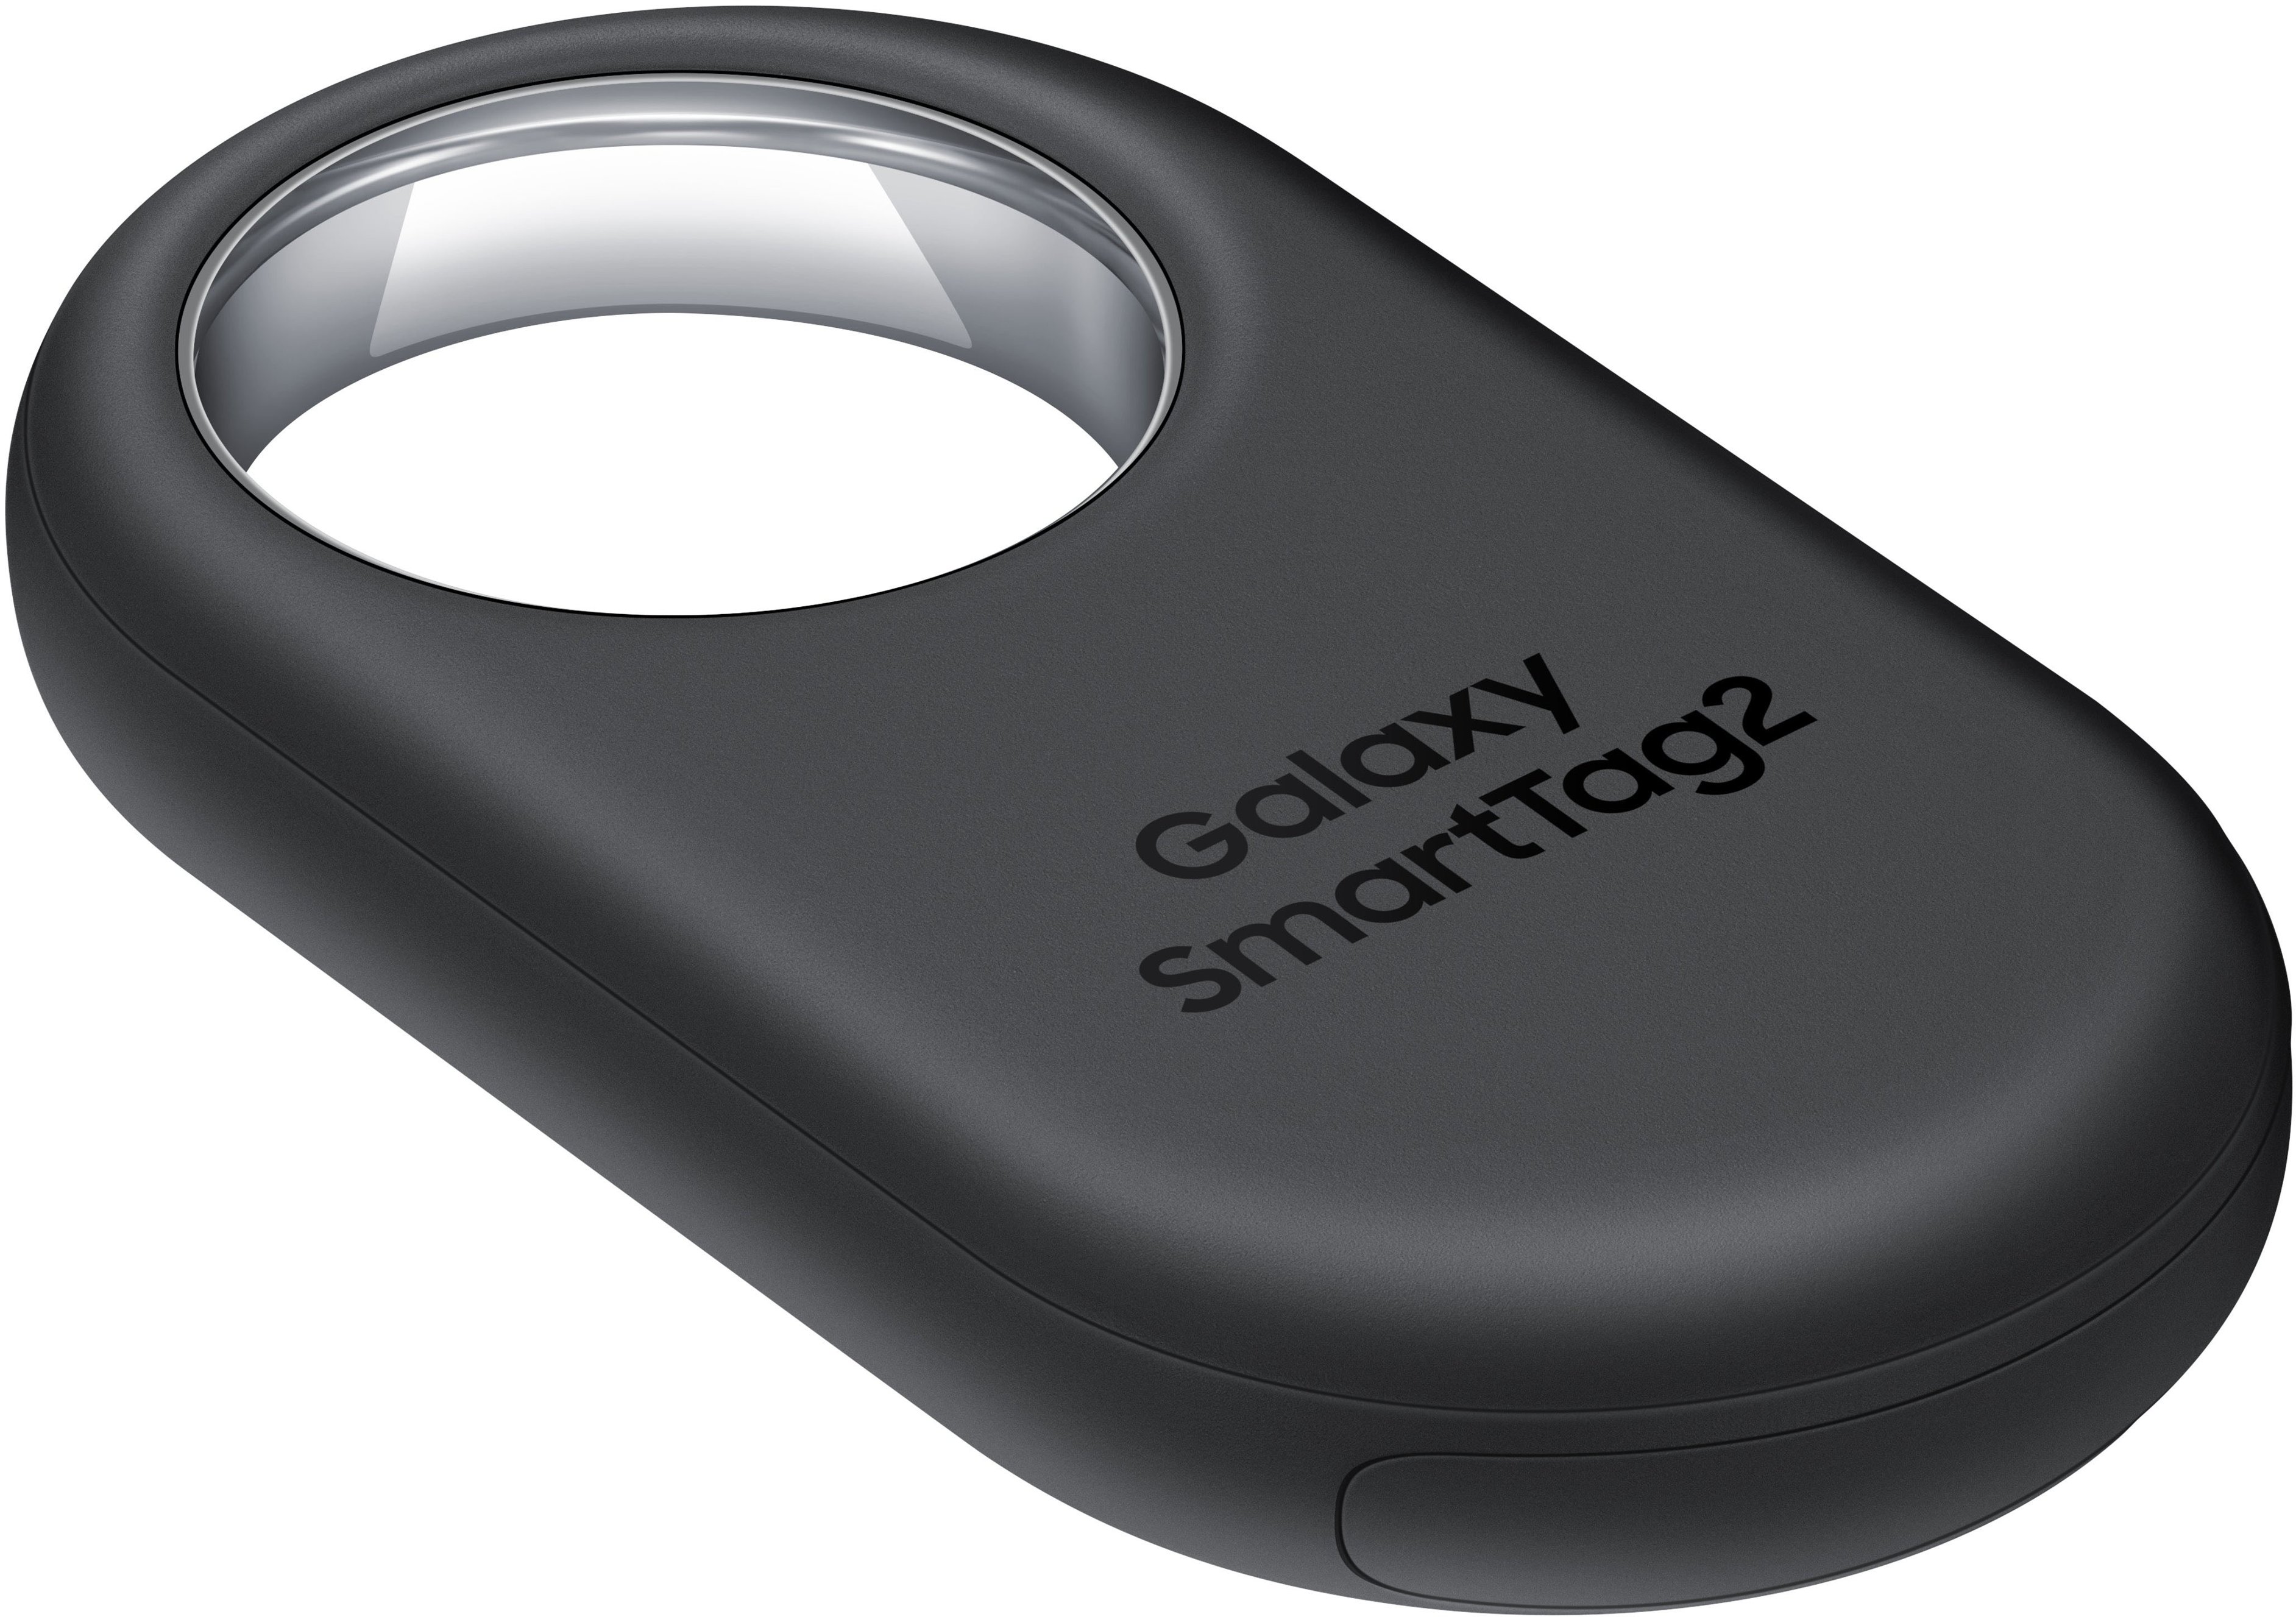 Samsung Galaxy SmartTag2 Black and White EI-T5600KWEGUS - Best Buy